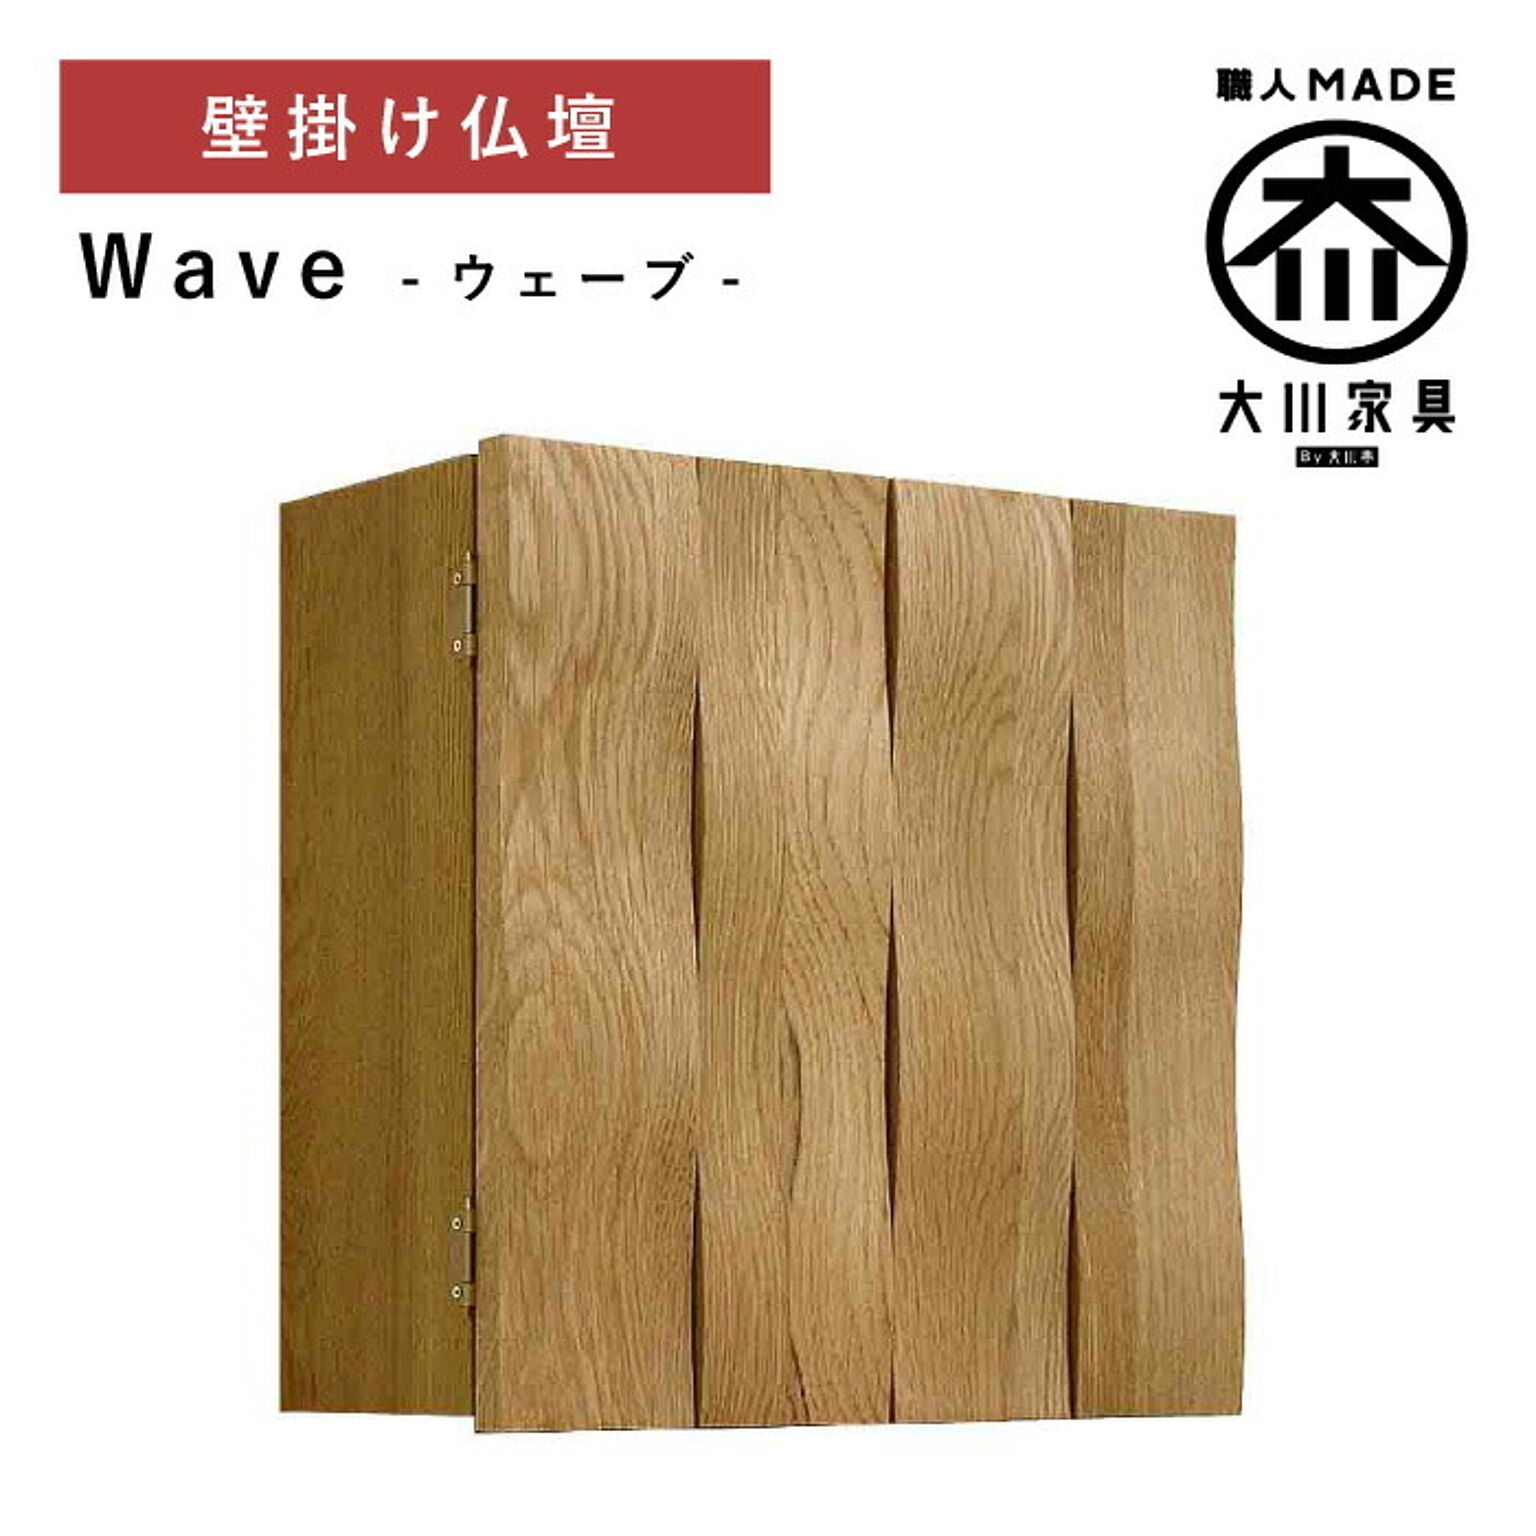 丸田木工 ウェーブ 仏壇 壁掛け仏壇 完成品 日本製 大川家具